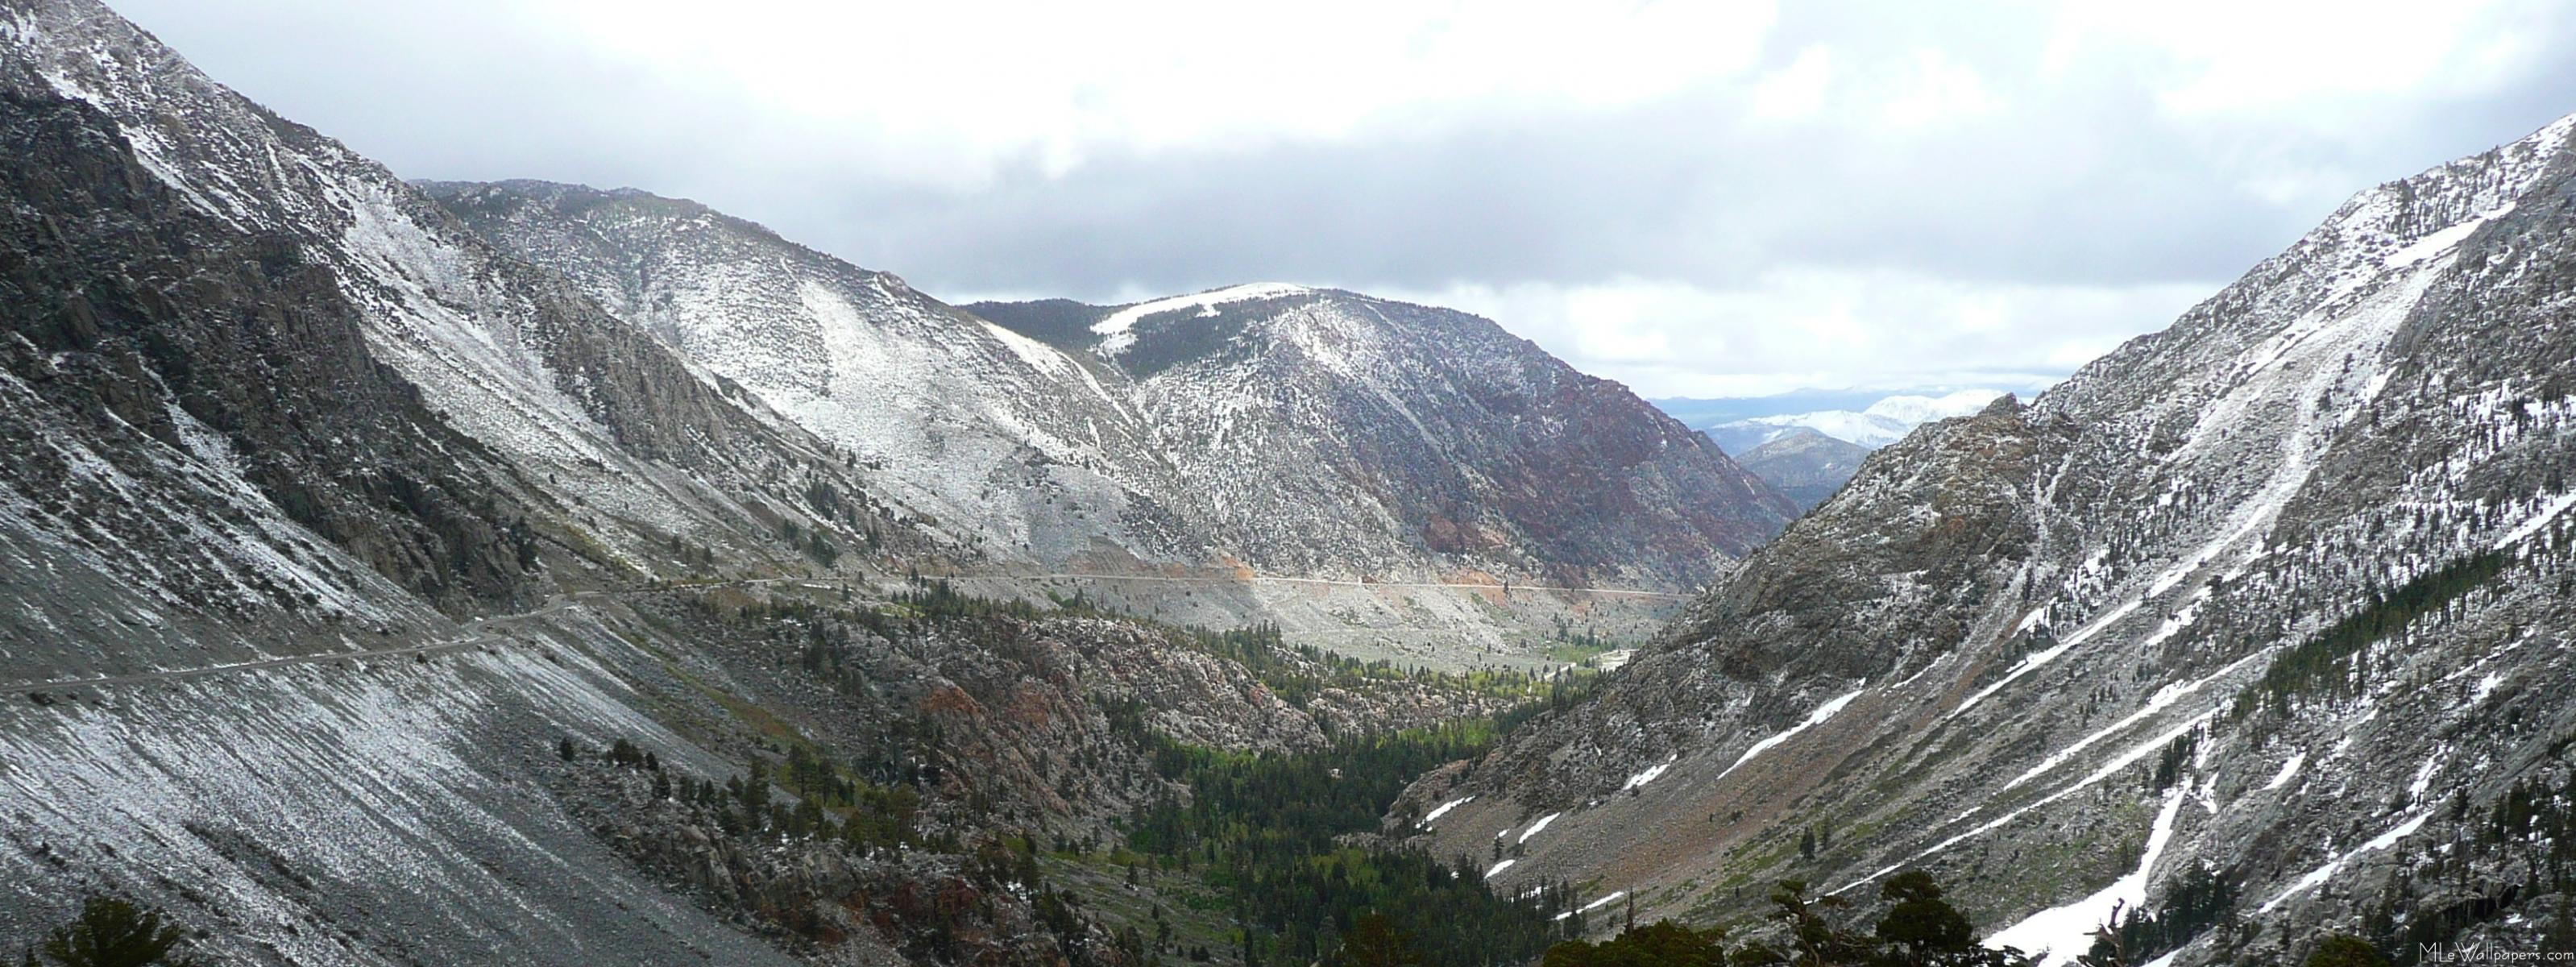 Driving Through The Snowy Sierra Nevada Mountains - Snowy Sierra , HD Wallpaper & Backgrounds